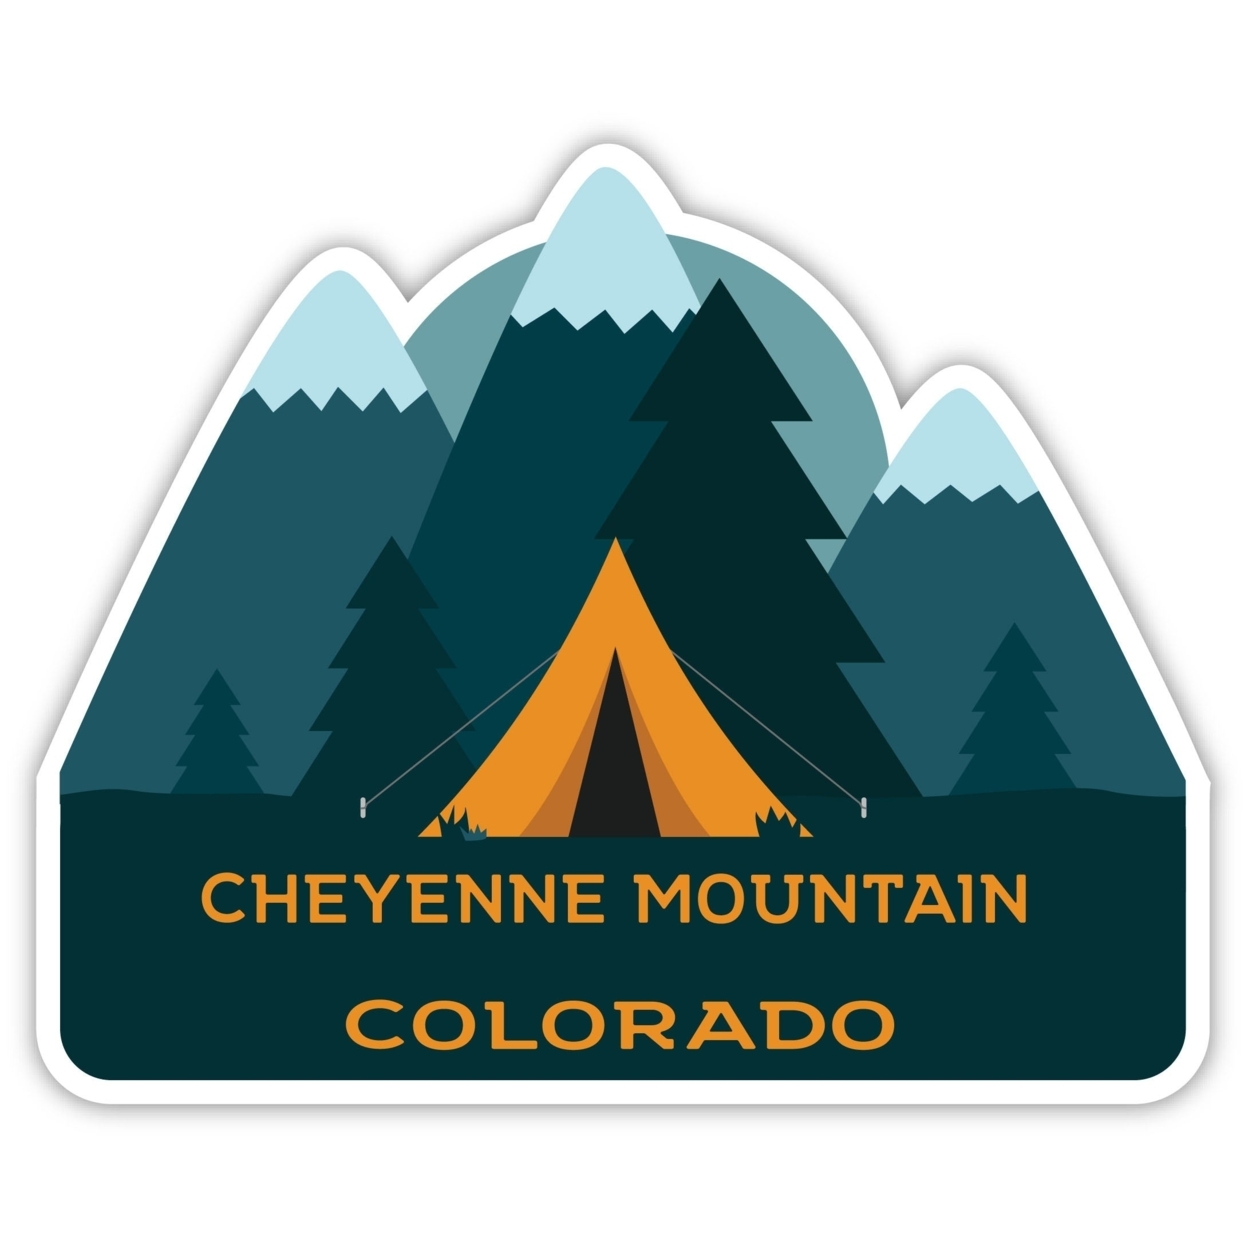 Cheyenne Mountain Colorado Souvenir Decorative Stickers (Choose Theme And Size) - 4-Pack, 10-Inch, Bear